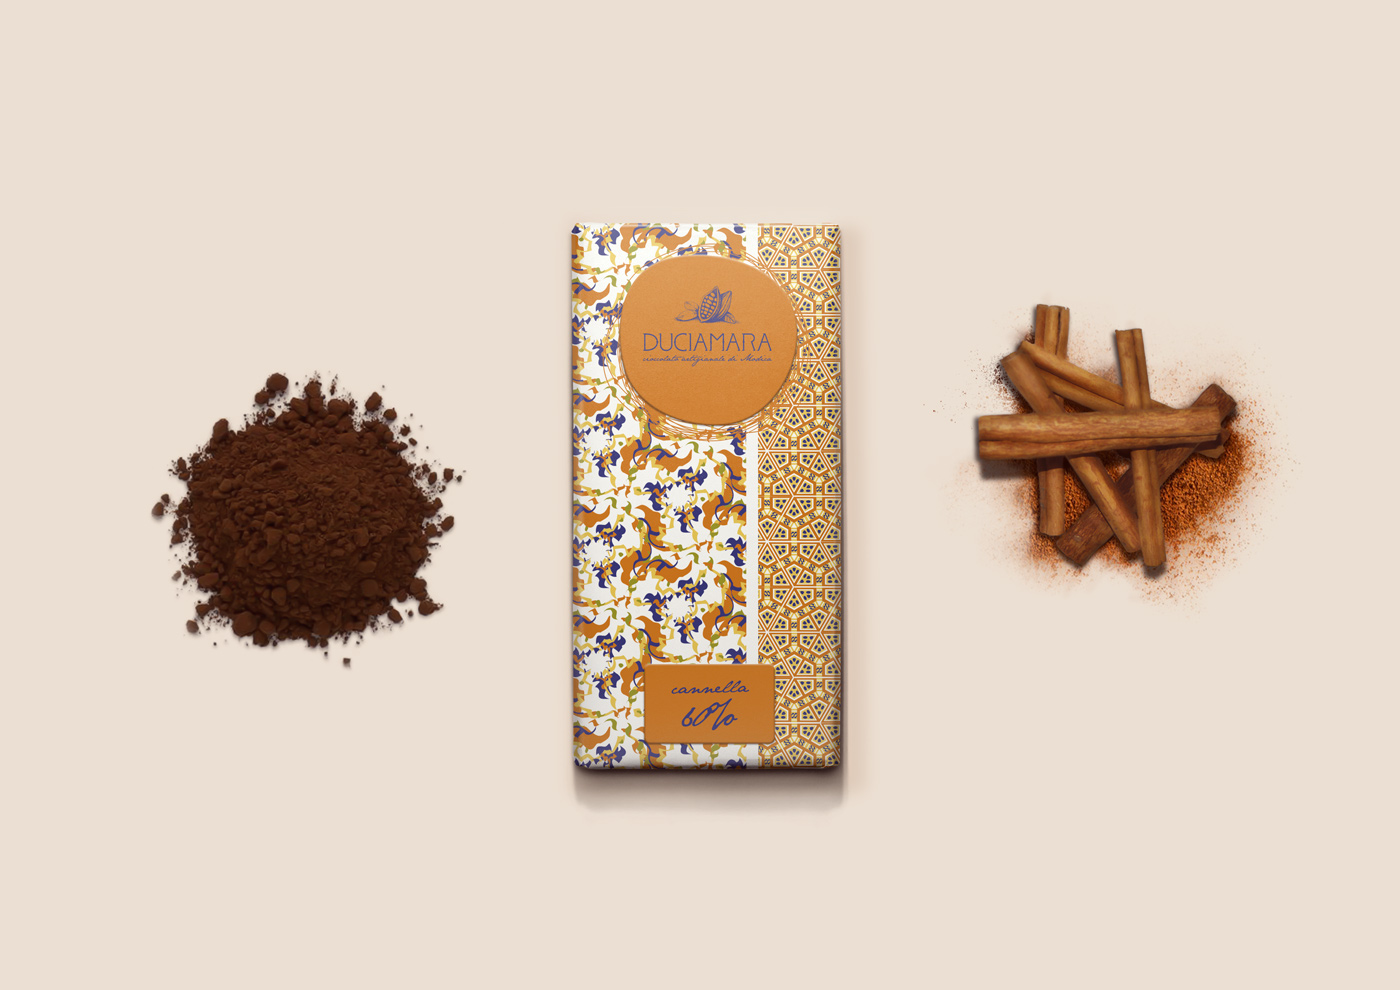 Duciamara modica sicily chocolate flavors sketches logo Label Patterns handcraft